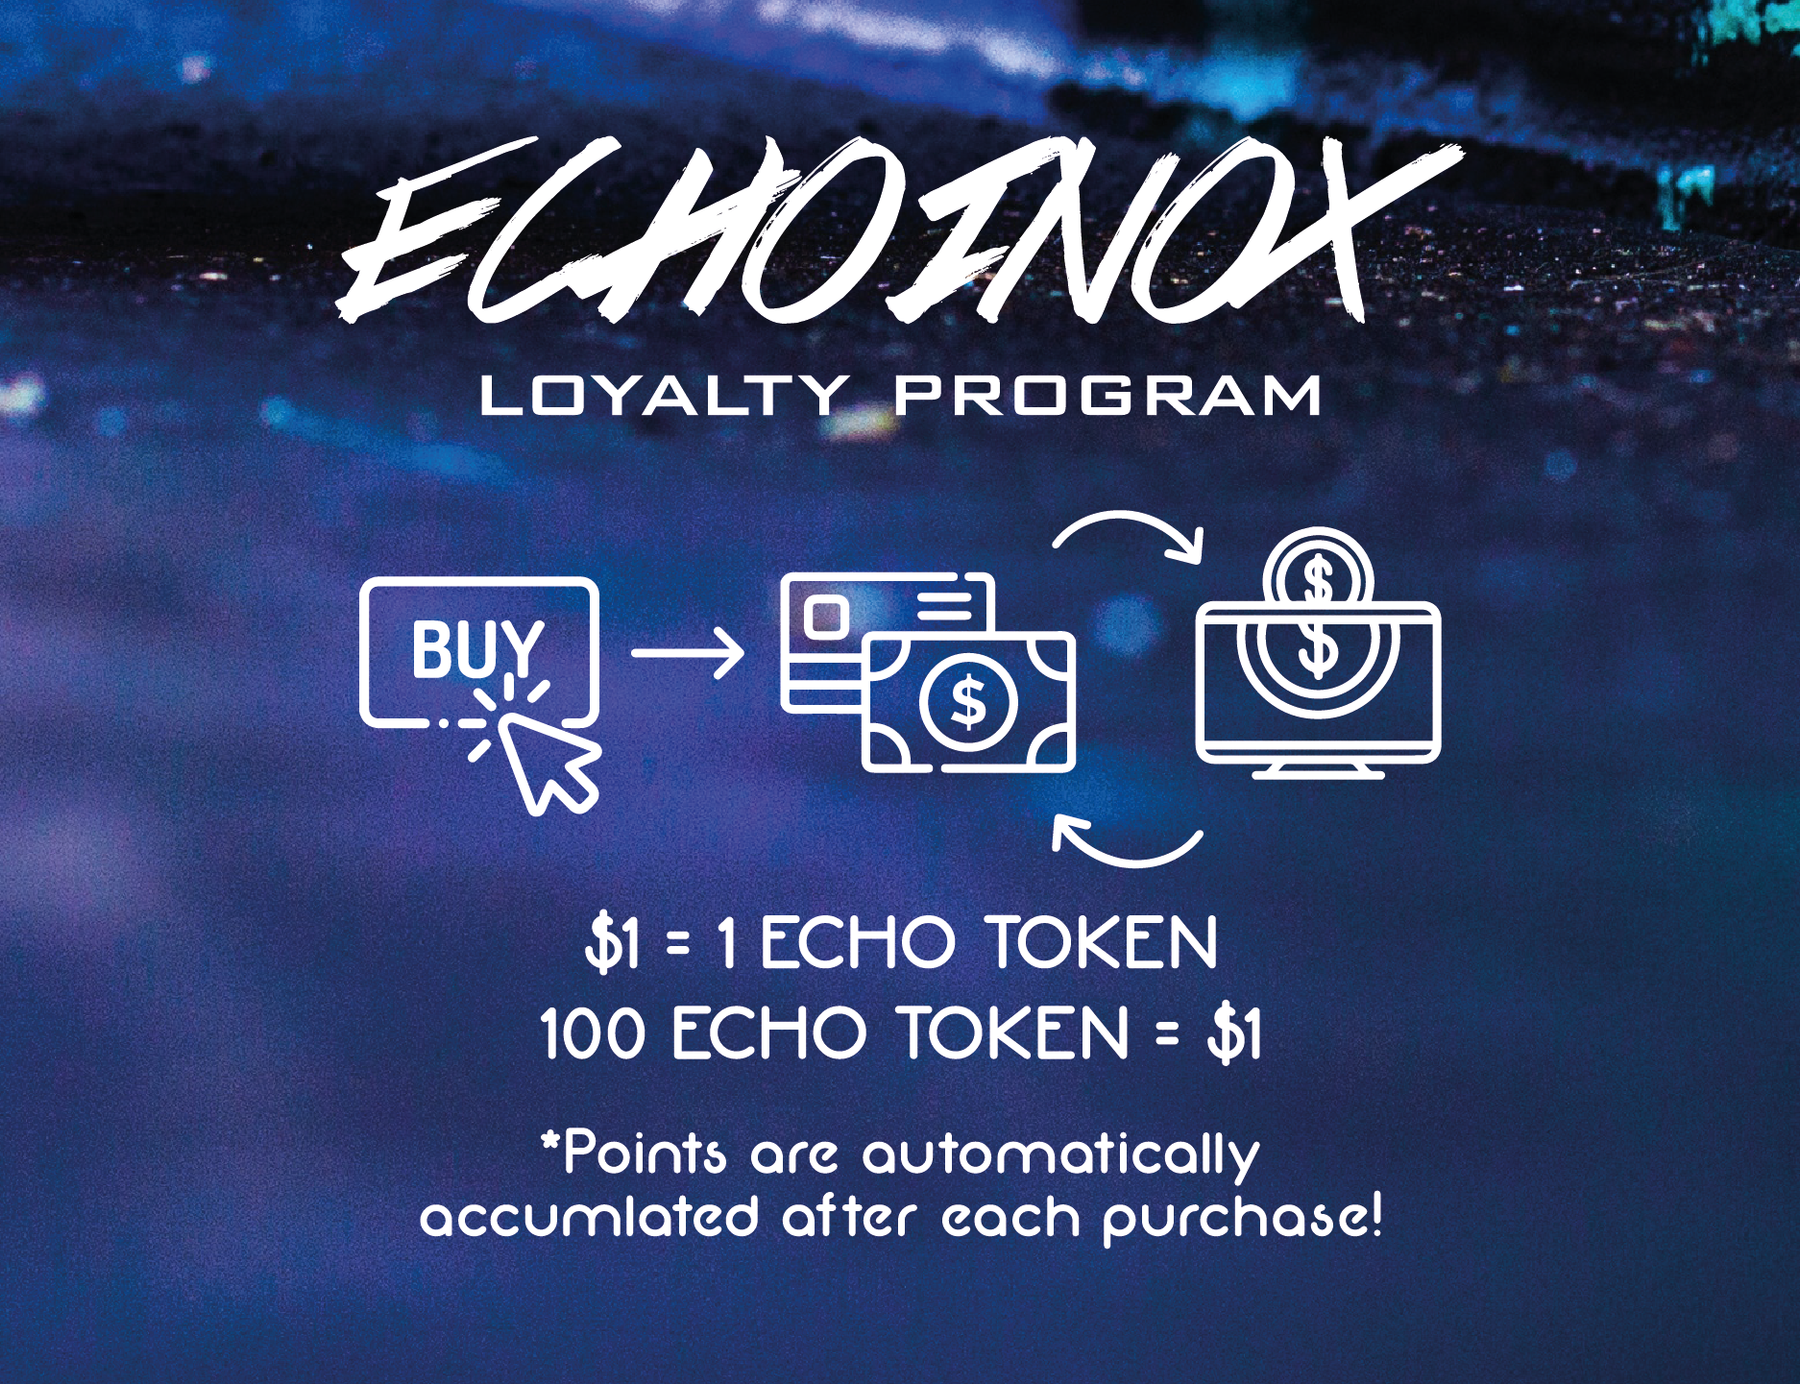 Echoinox loyalty program echo tokens rewards purchase